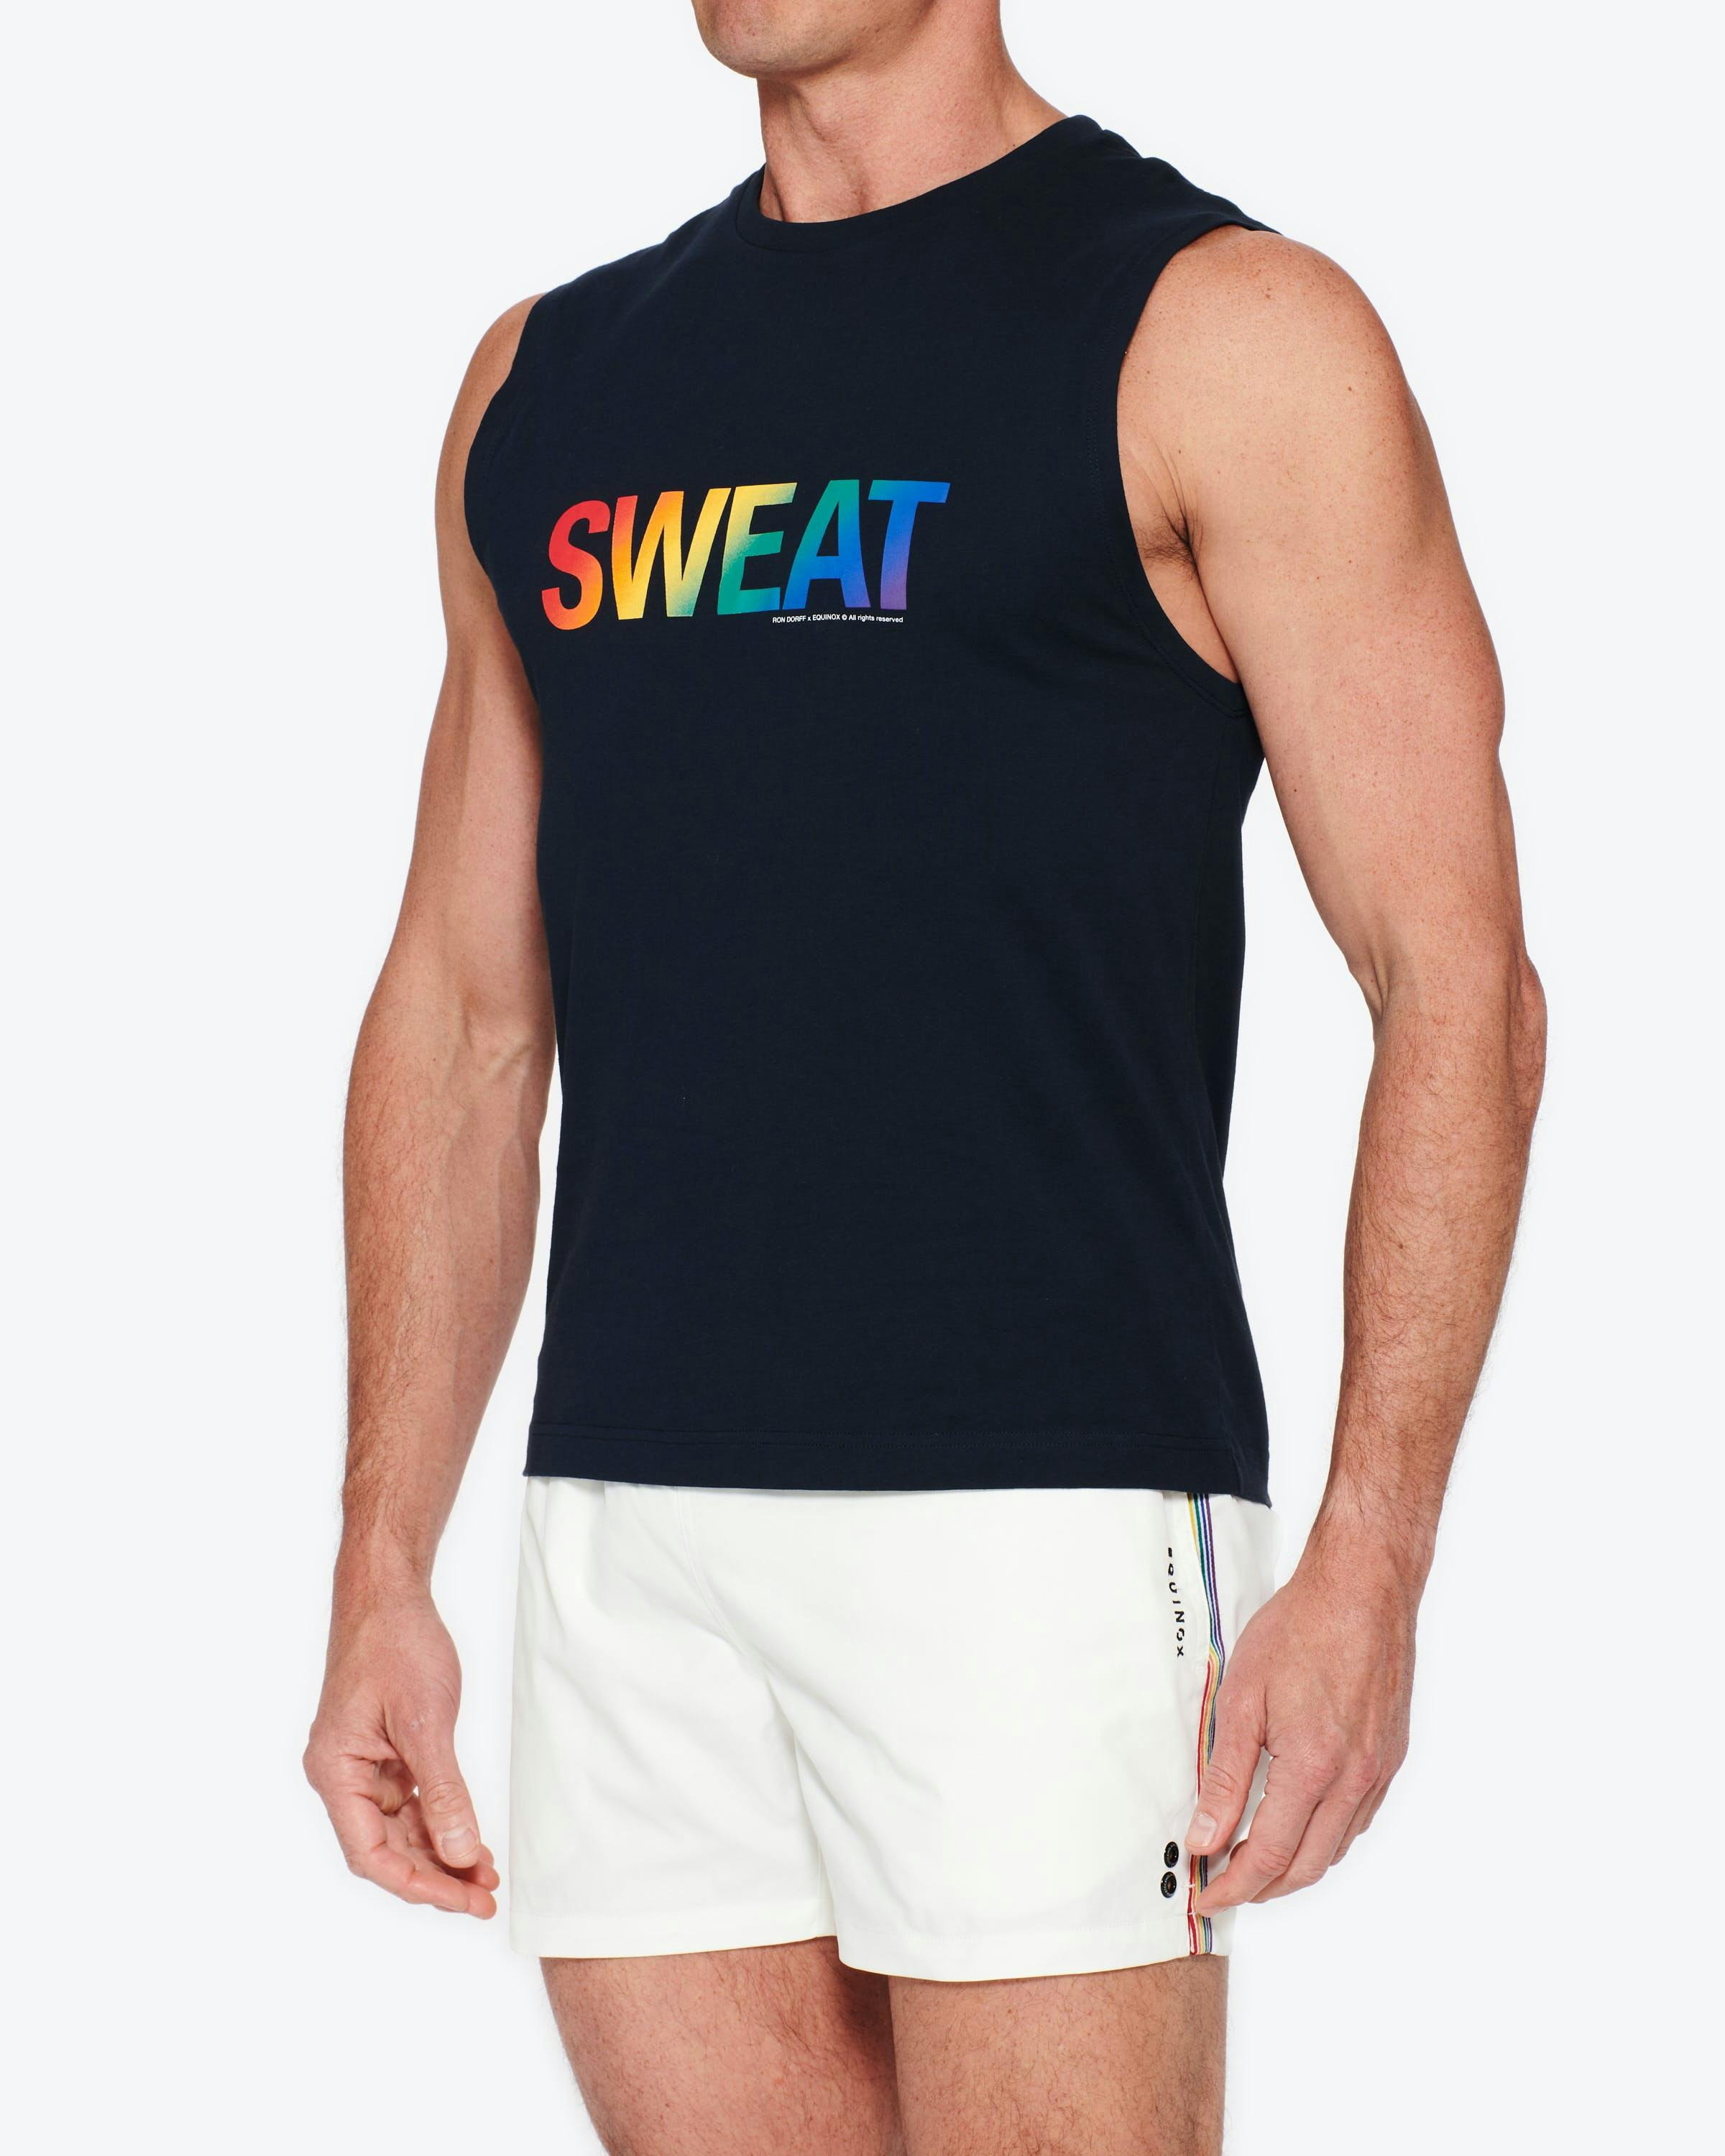 clothing t-shirt shorts adult male man person tank top beachwear